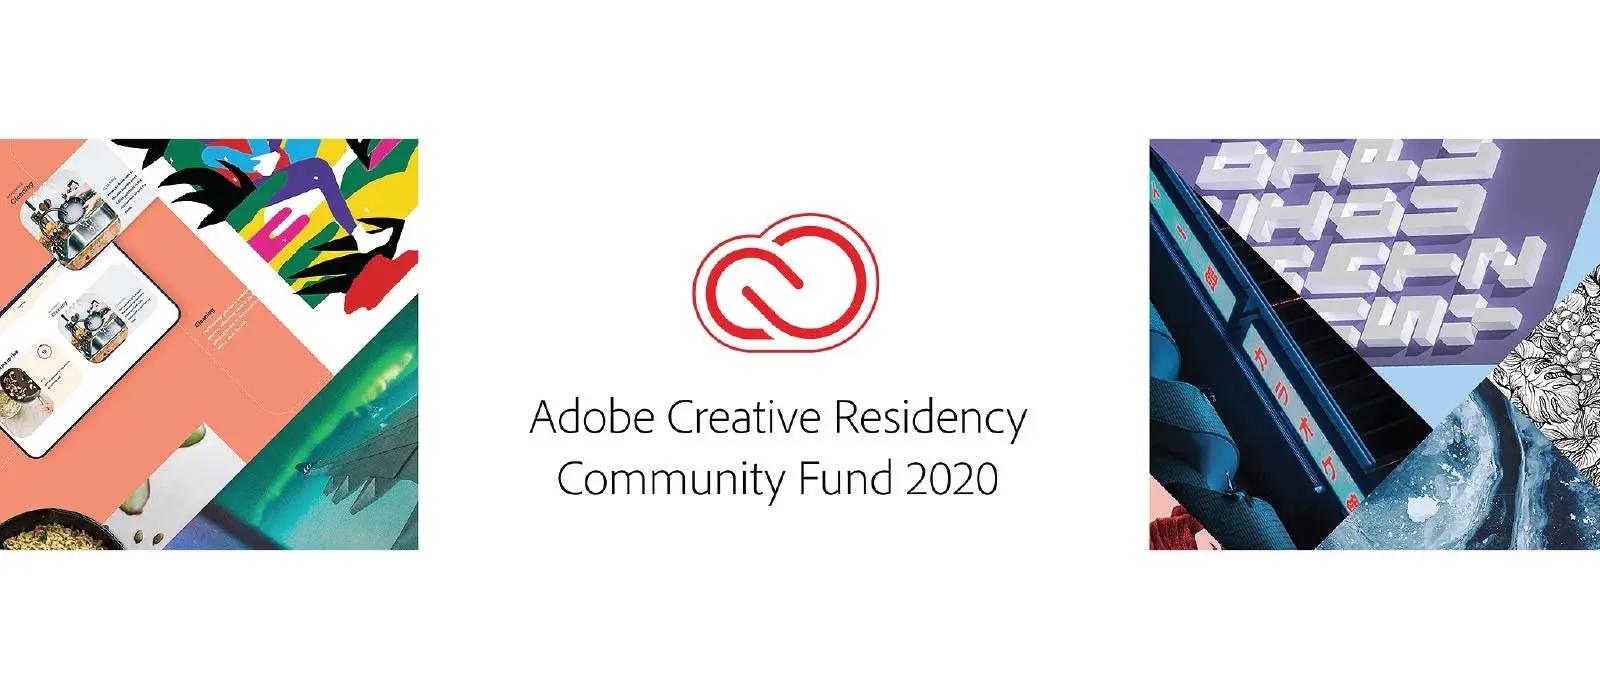 Adobe Creative Residency Community Fund 2020